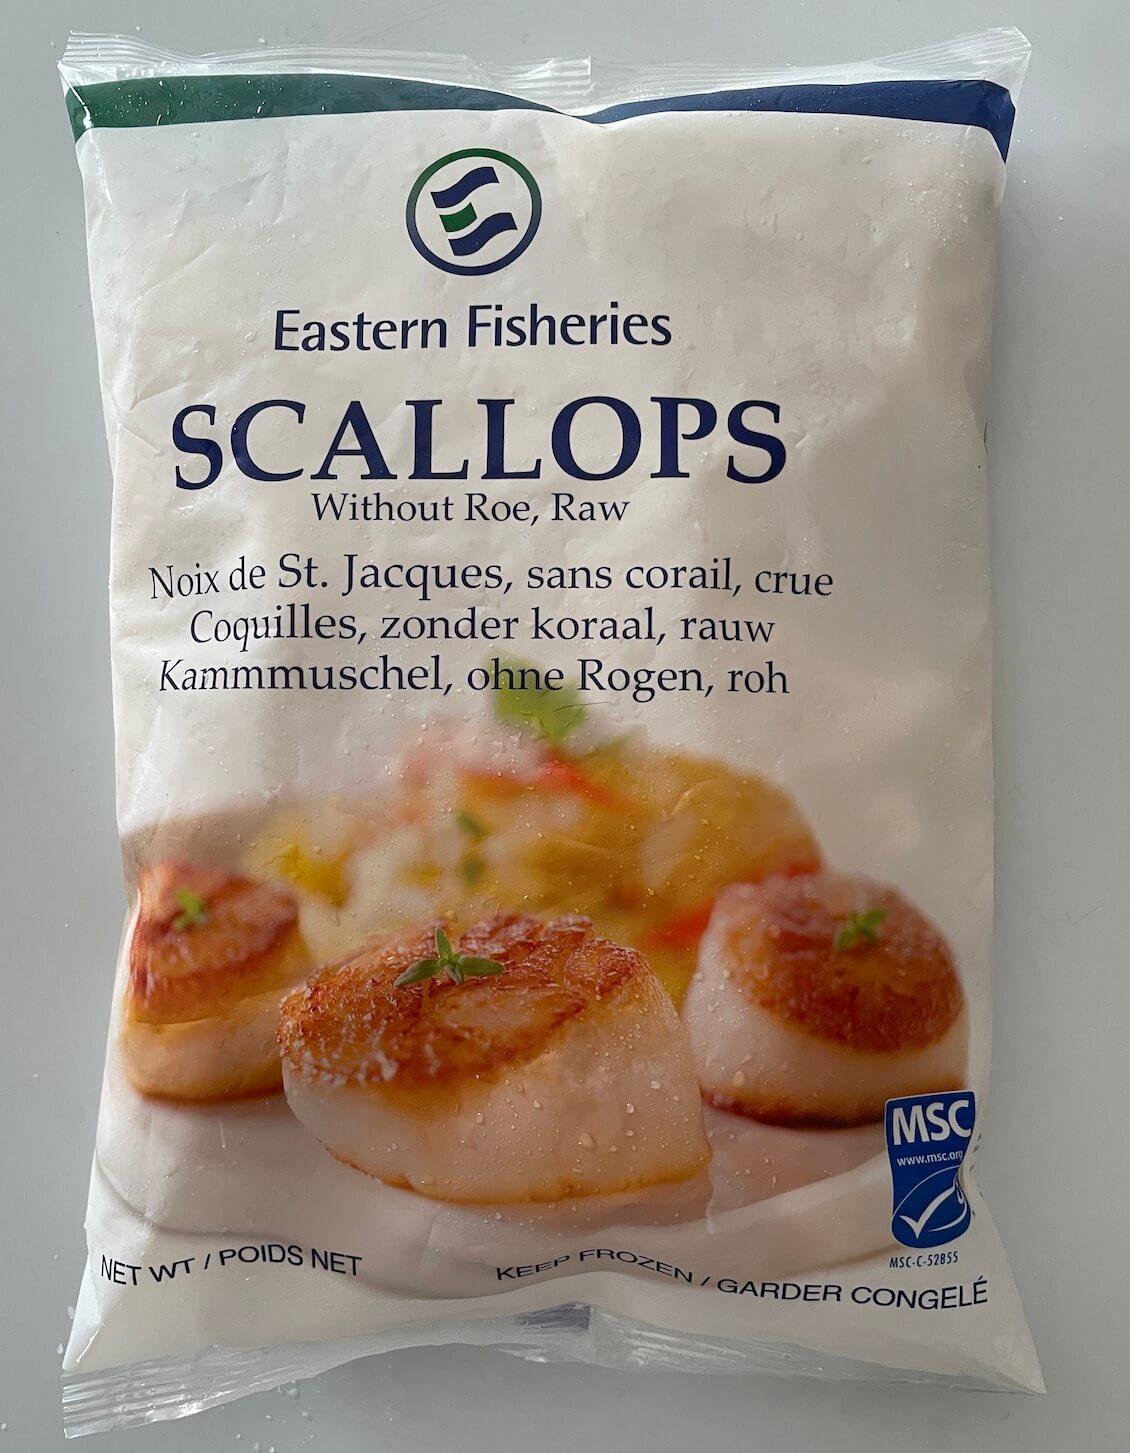 Scallops Without Roe - reddotgreendot